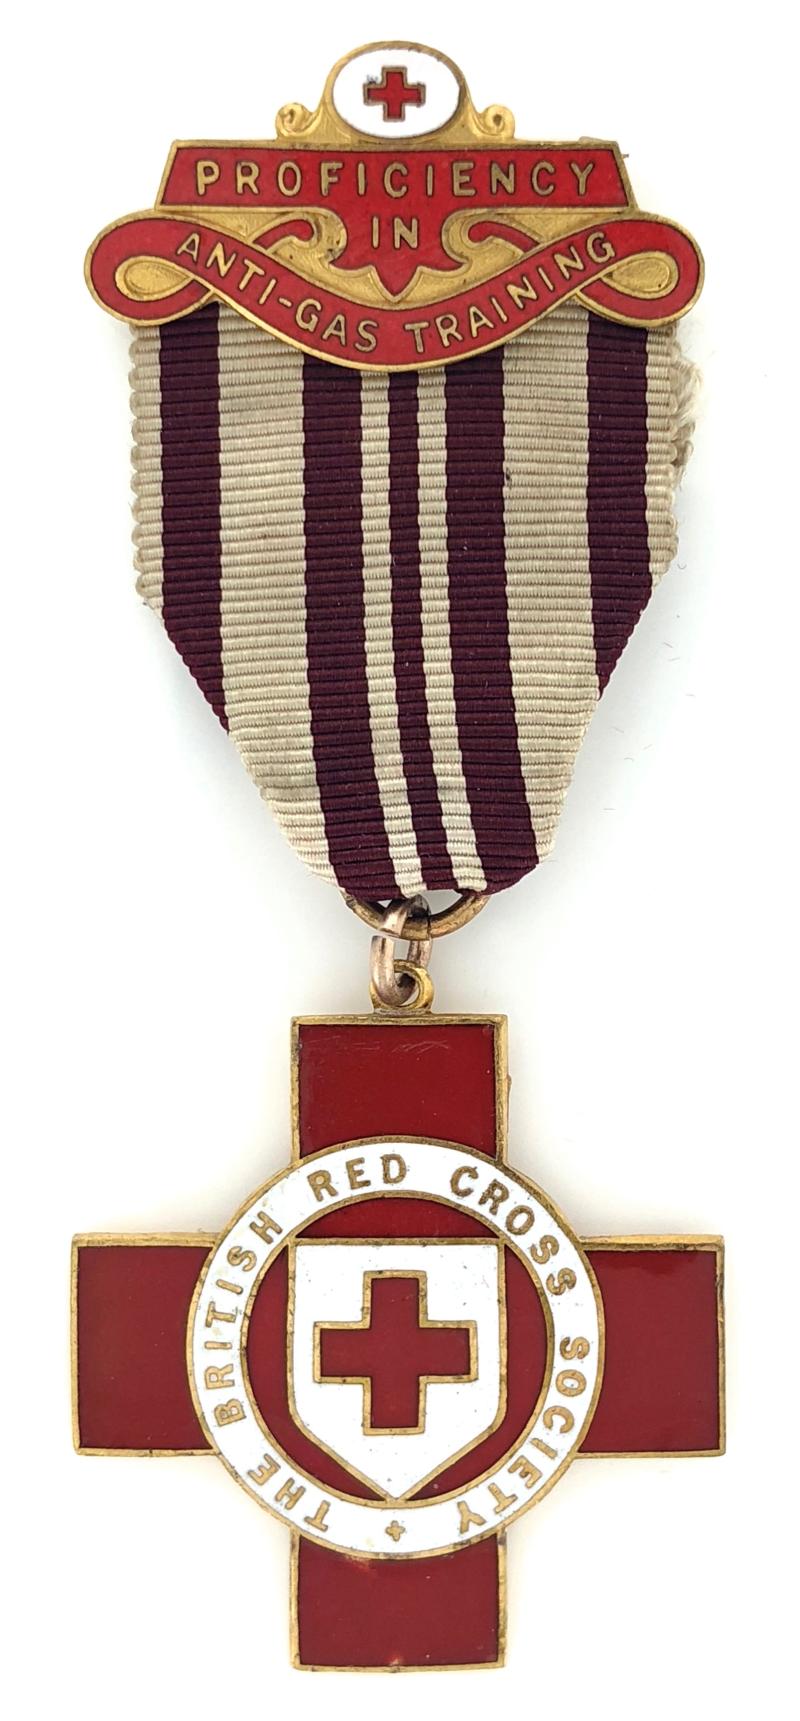 British Red Cross Society Proficiency Anti Gas Training medal badge